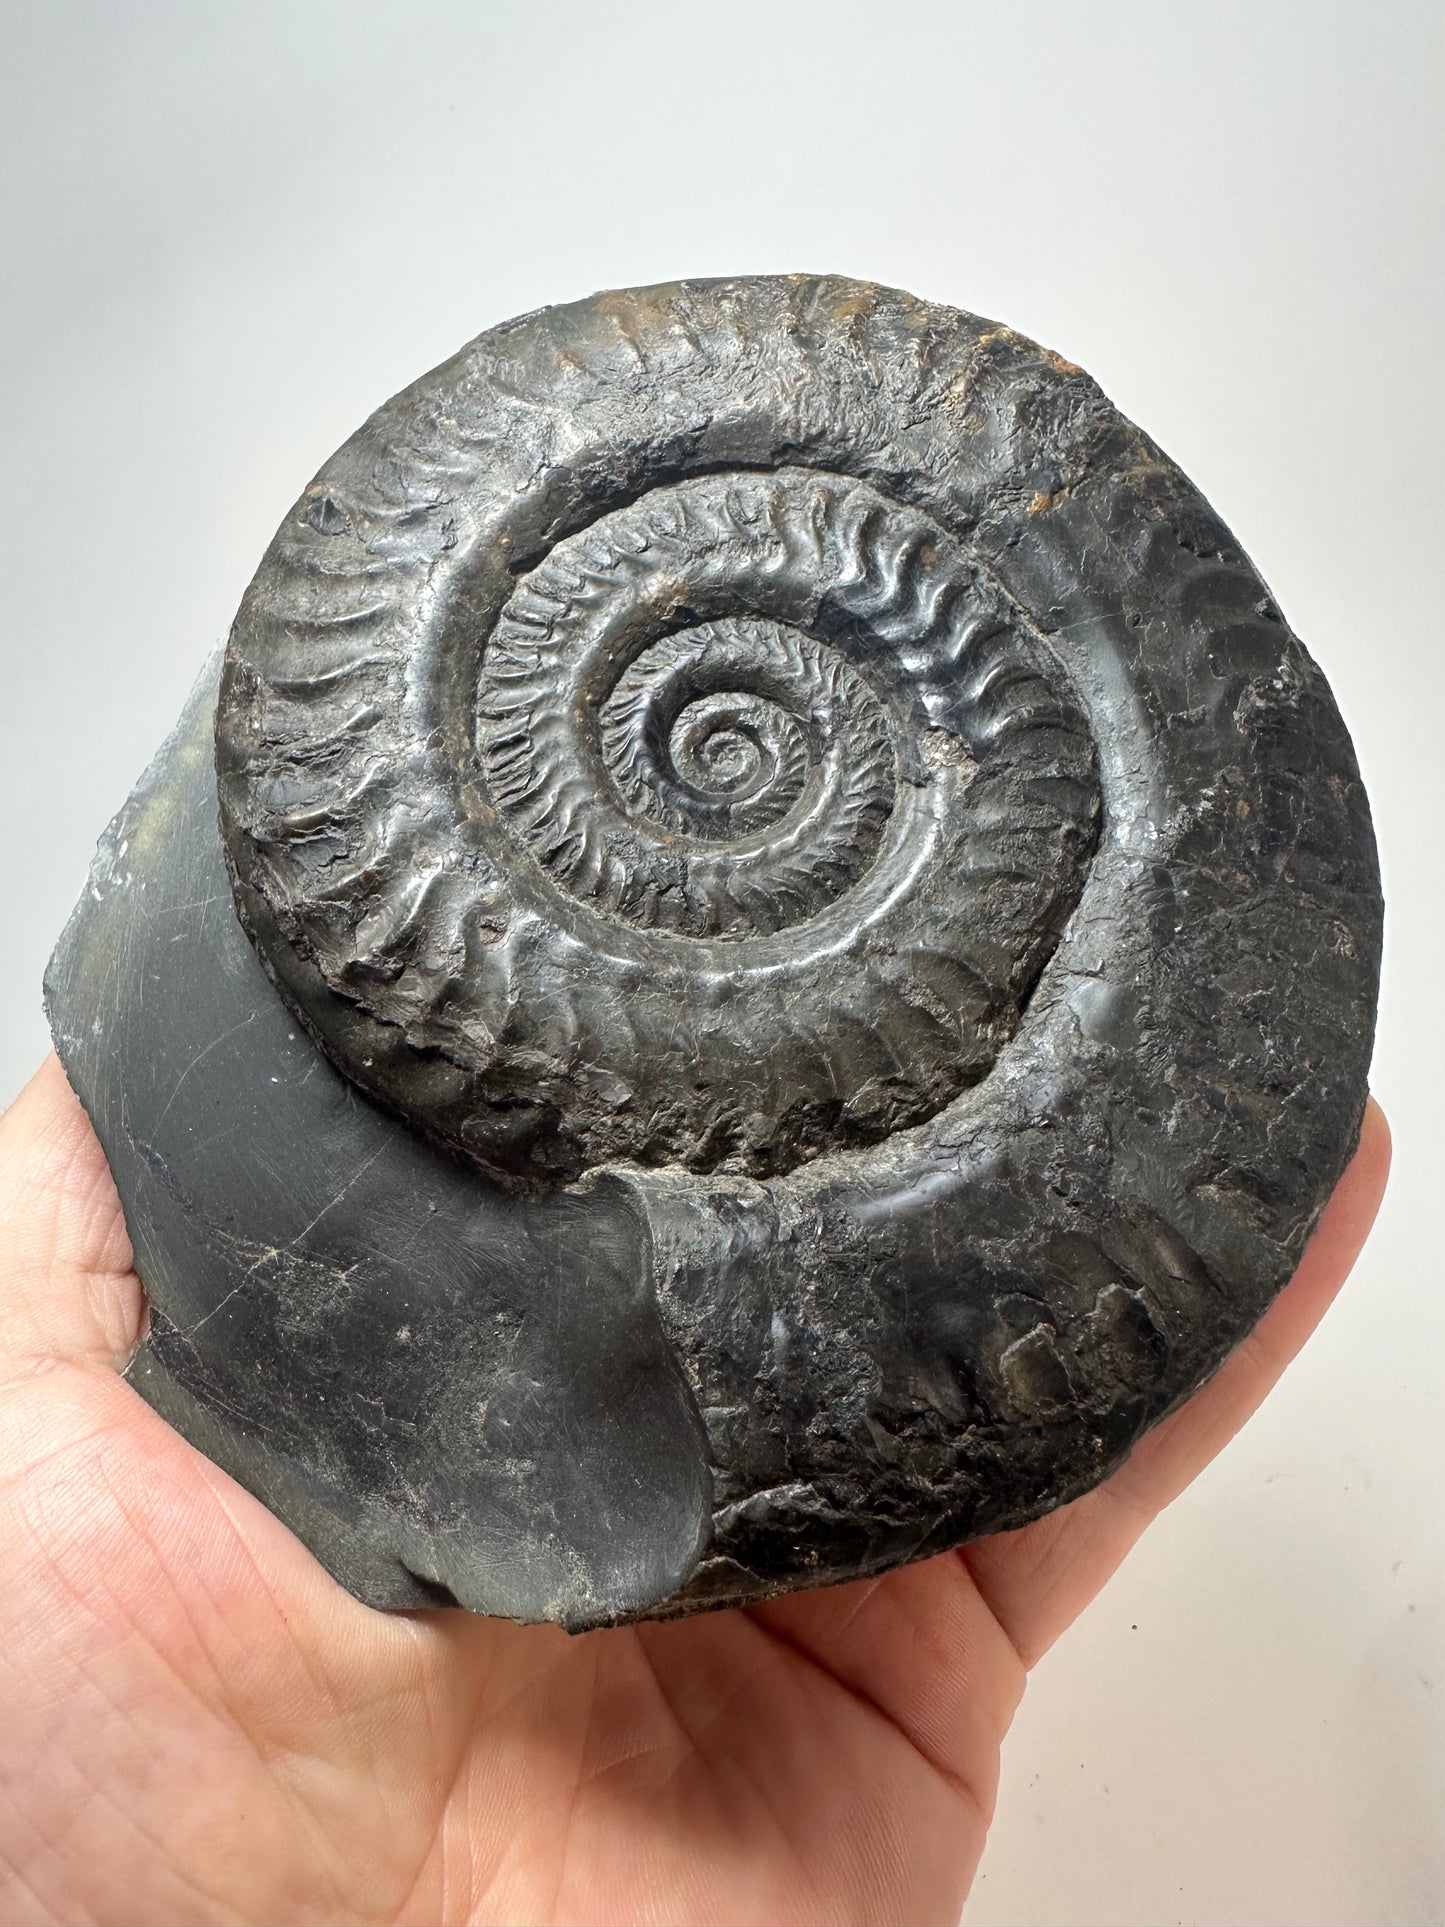 Hildoceras Lustanicum Ammonite, Jurassic coast, North Yorkshire, Whitby.